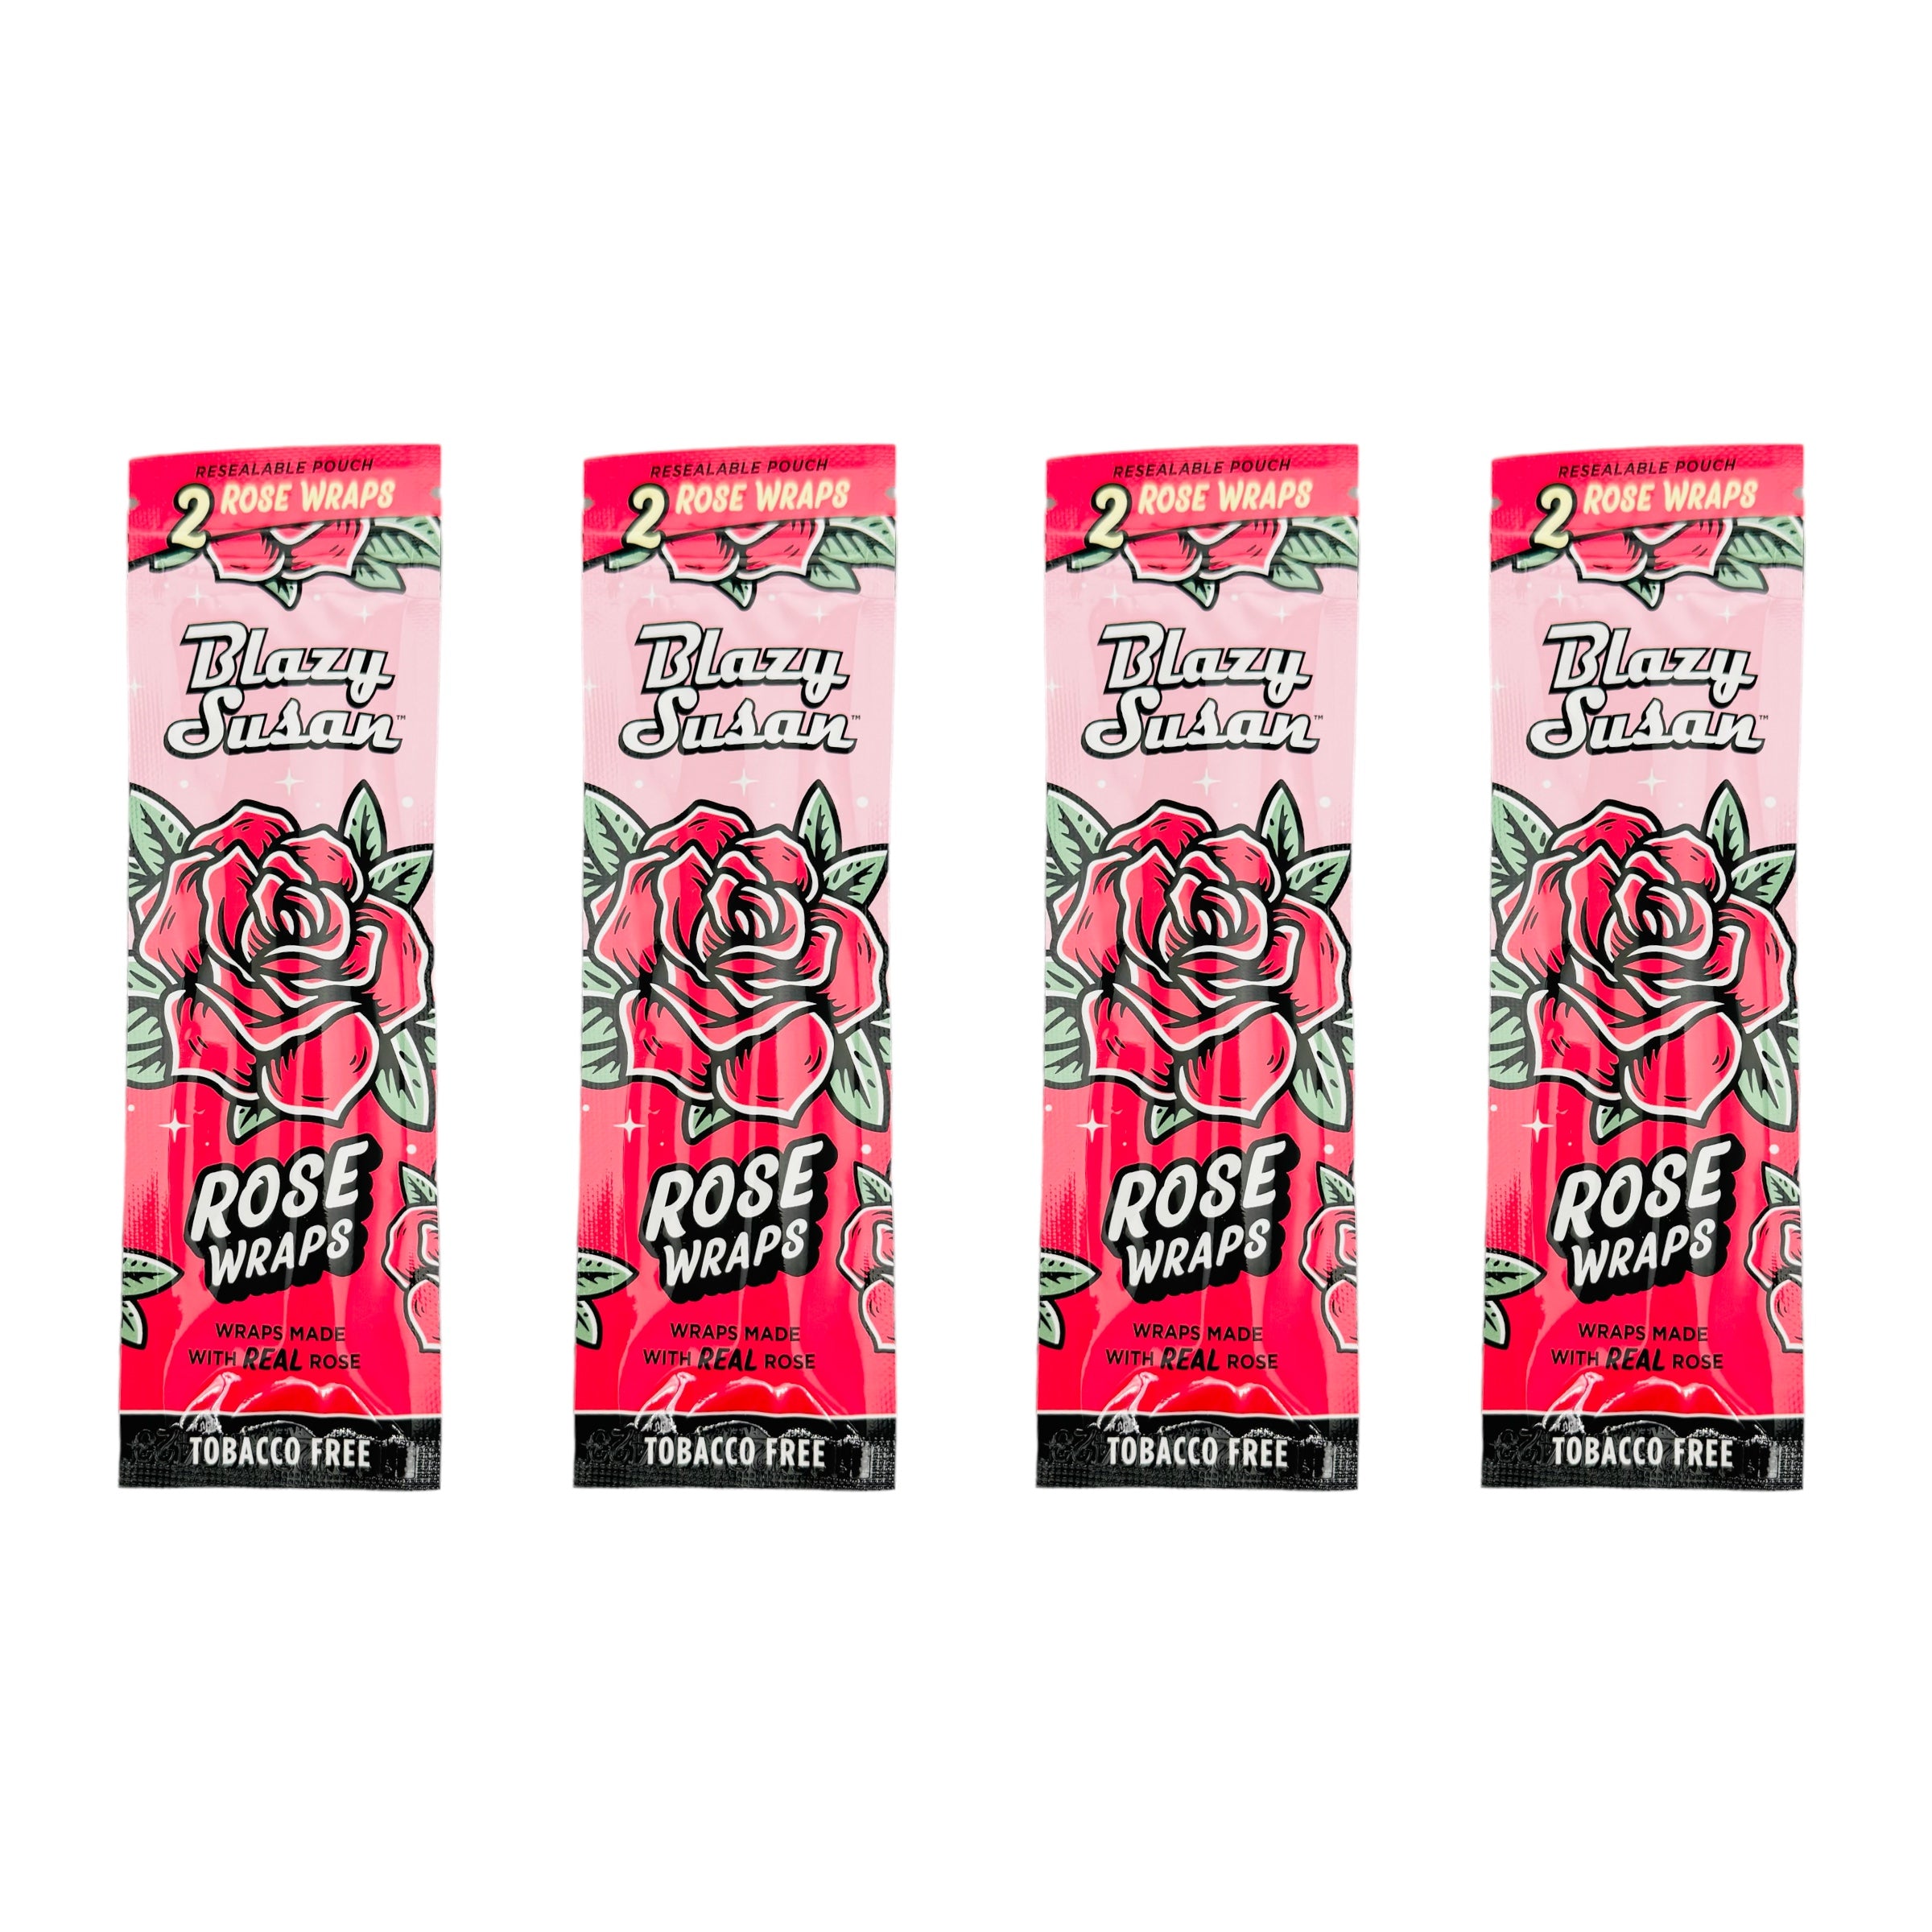 Blazy Susan Rose Wraps 2ct Real Rose Petal Wrap - 4 Packs